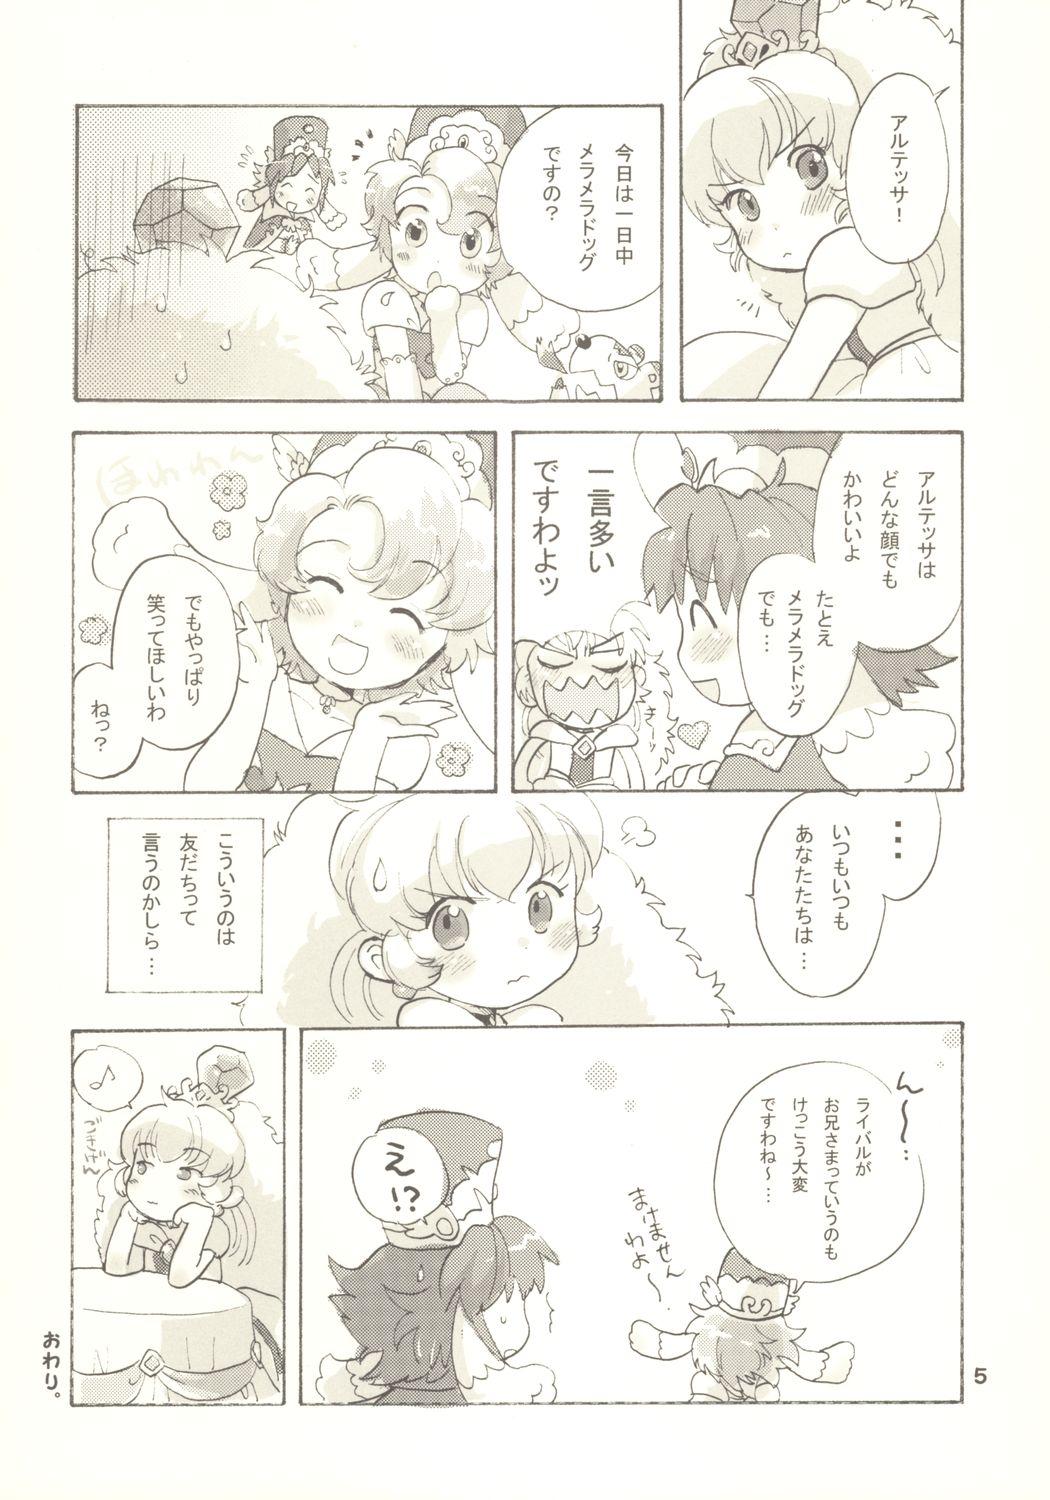 Pounded Egao ni Nare - Please give me smiling face - Fushigiboshi no futagohime Asia - Page 4